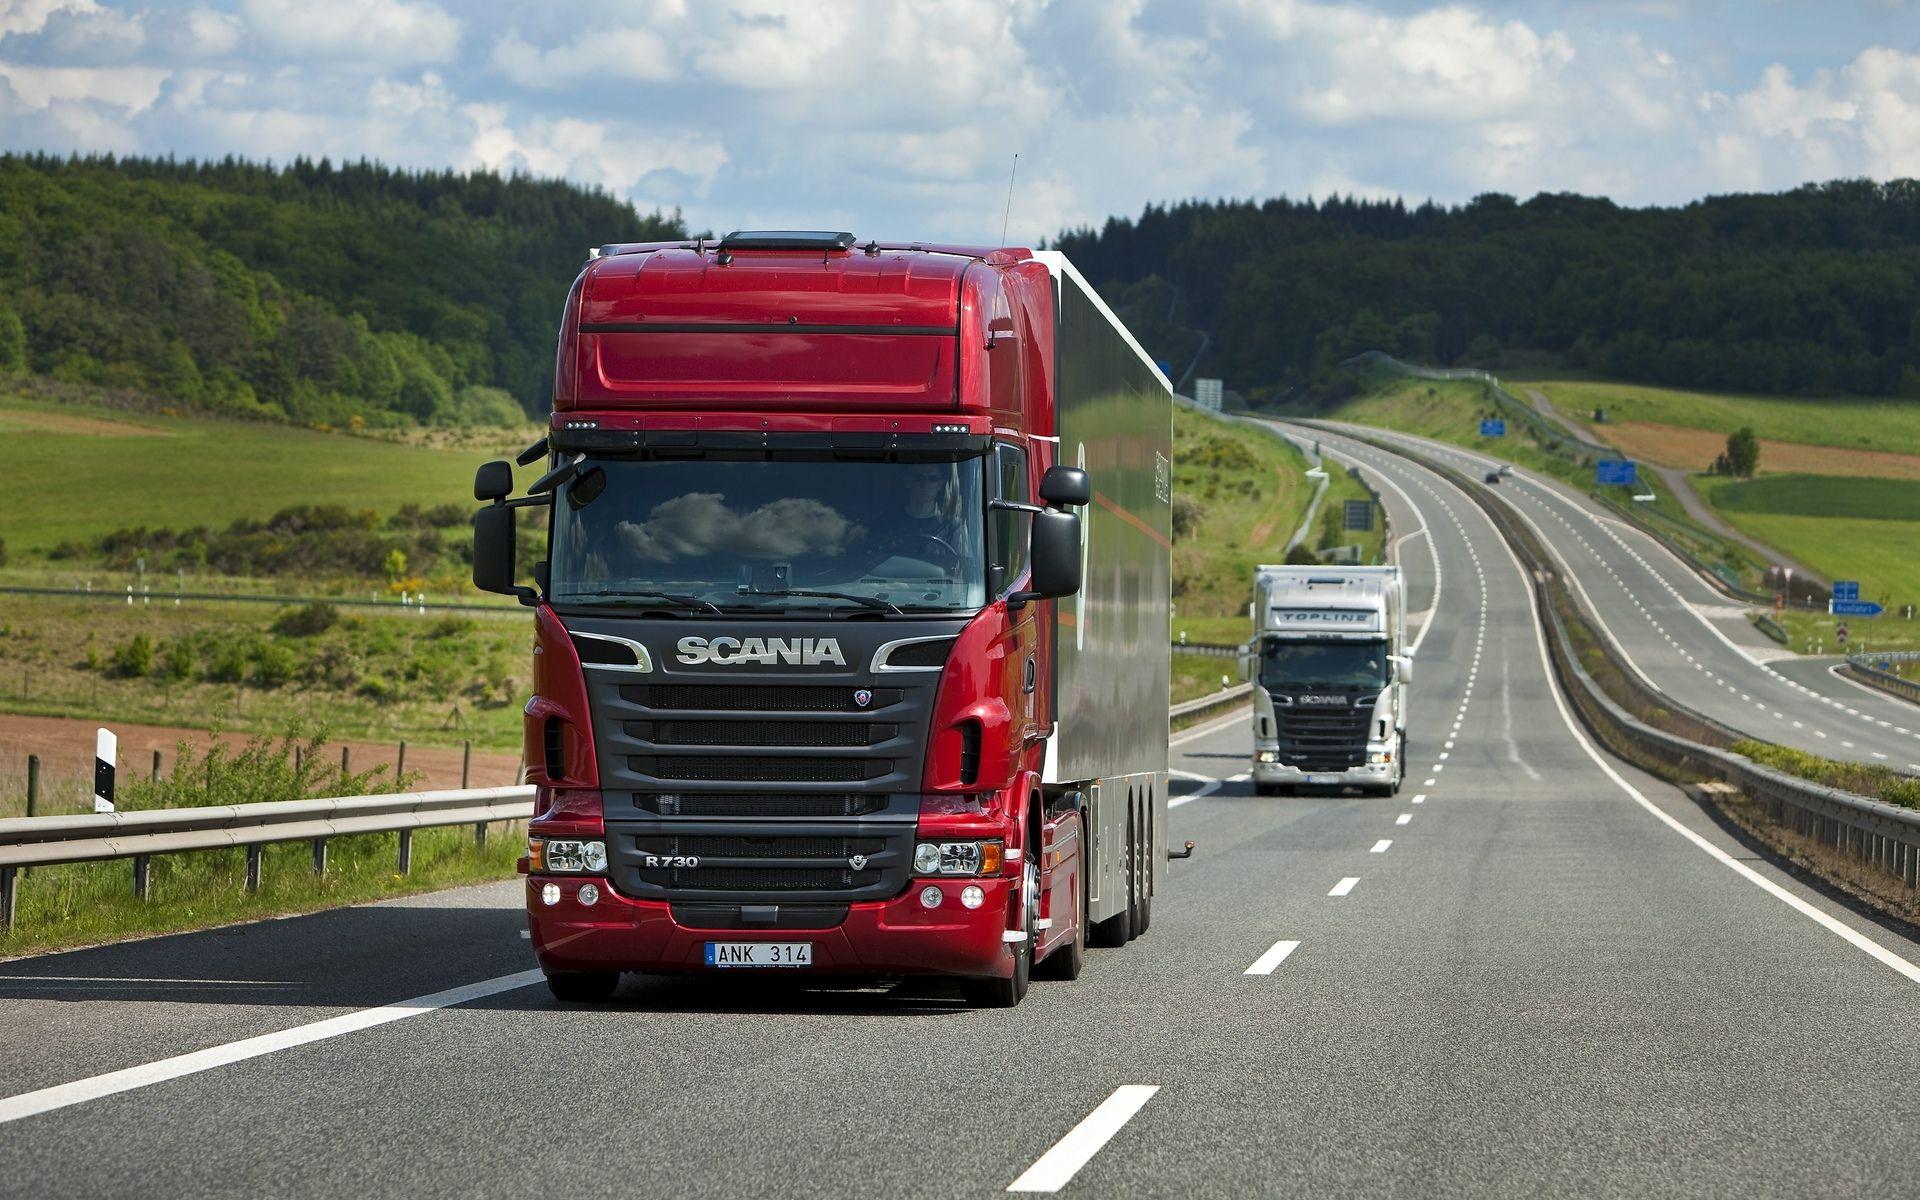 Scania trucks on the highway wallpaper download. Wallpaper